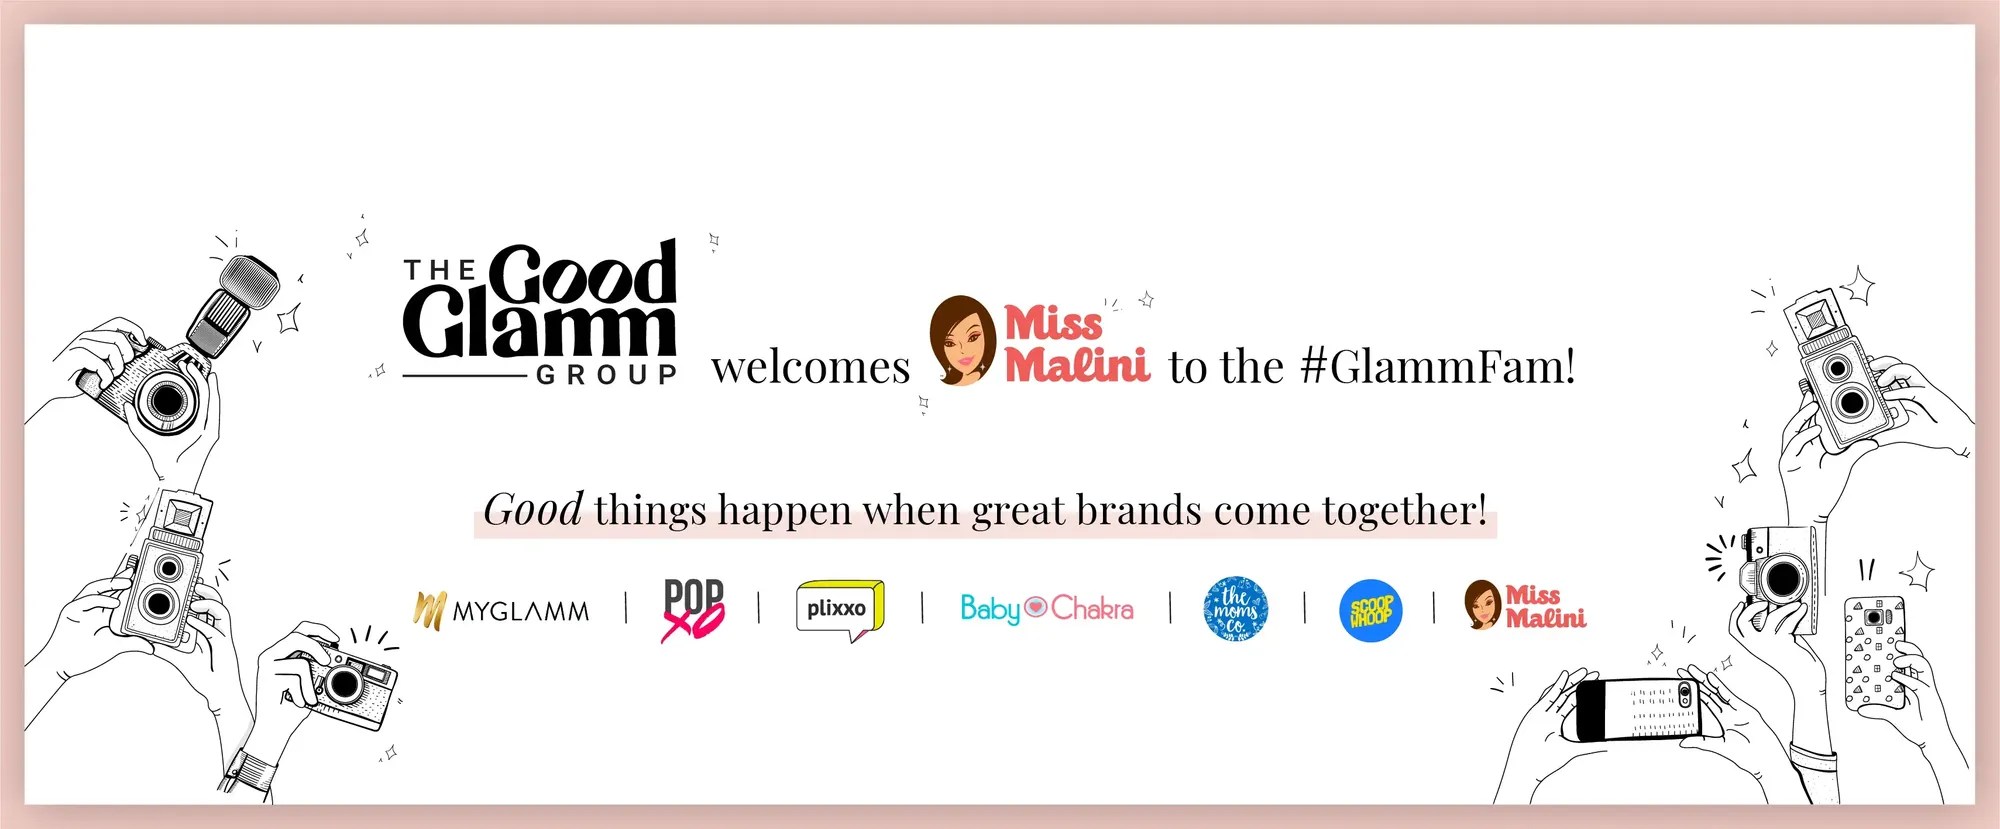 The Good Glamm Group welcomes MissMalini to the #GlammFam!